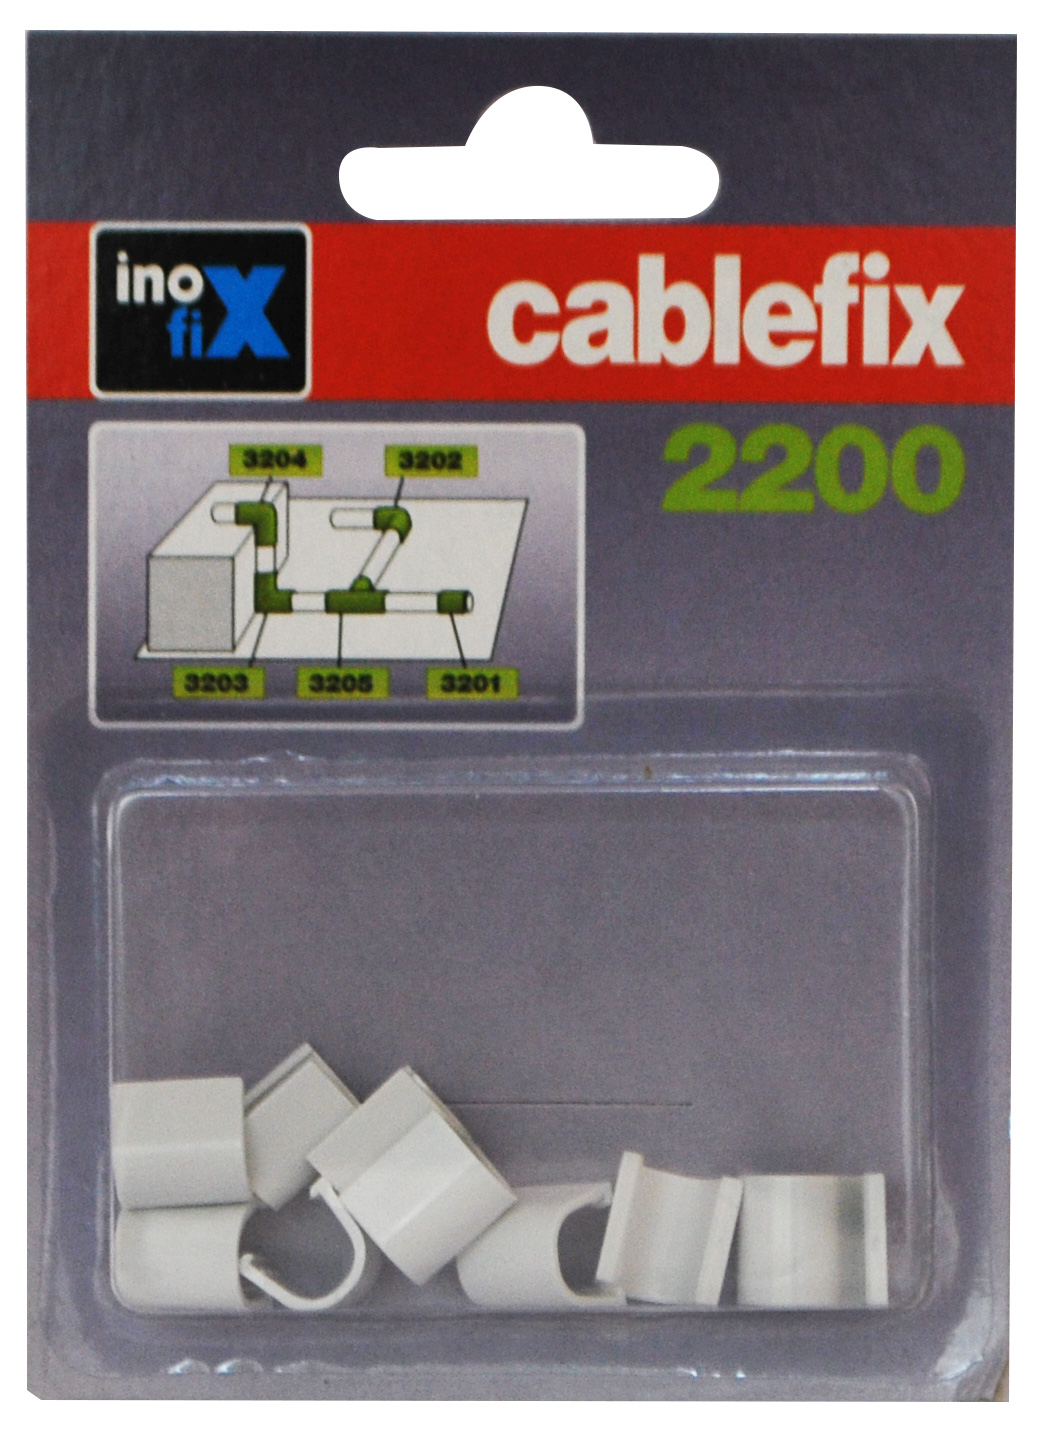 INOFIX 3200 CABLEFIX KIT 2200 WHITE